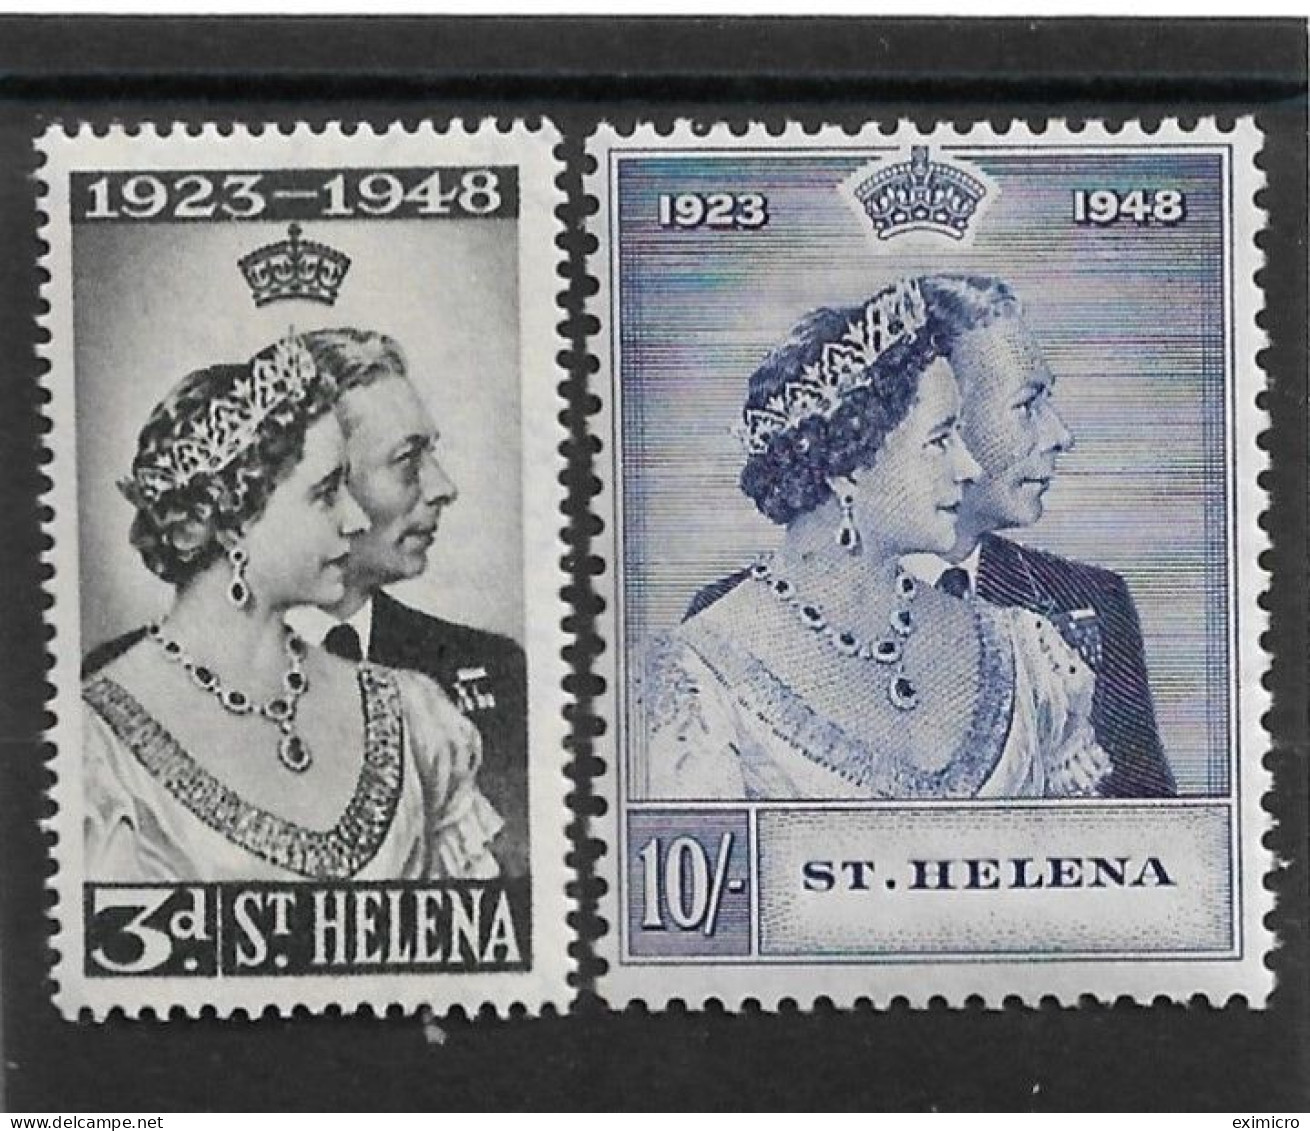 ST HELENA1948 SILVER WEDDING SET MOUNTED MINT Cat £30+ - Saint Helena Island